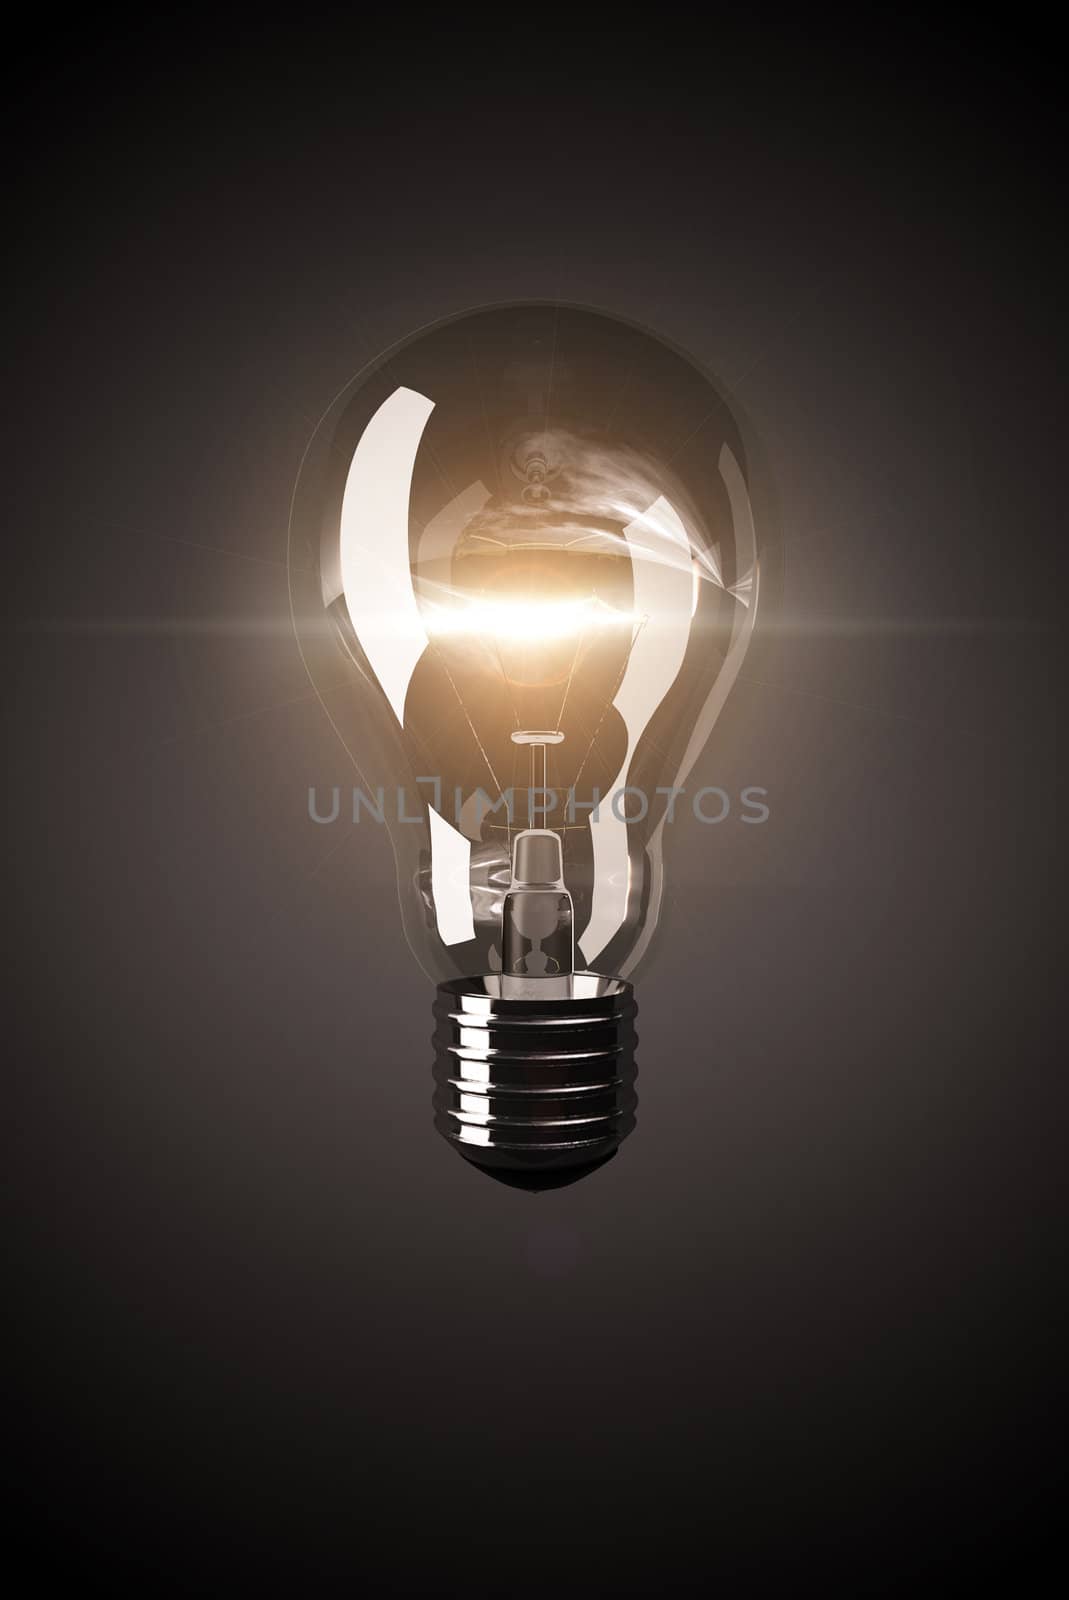 Light bulb by woodoo